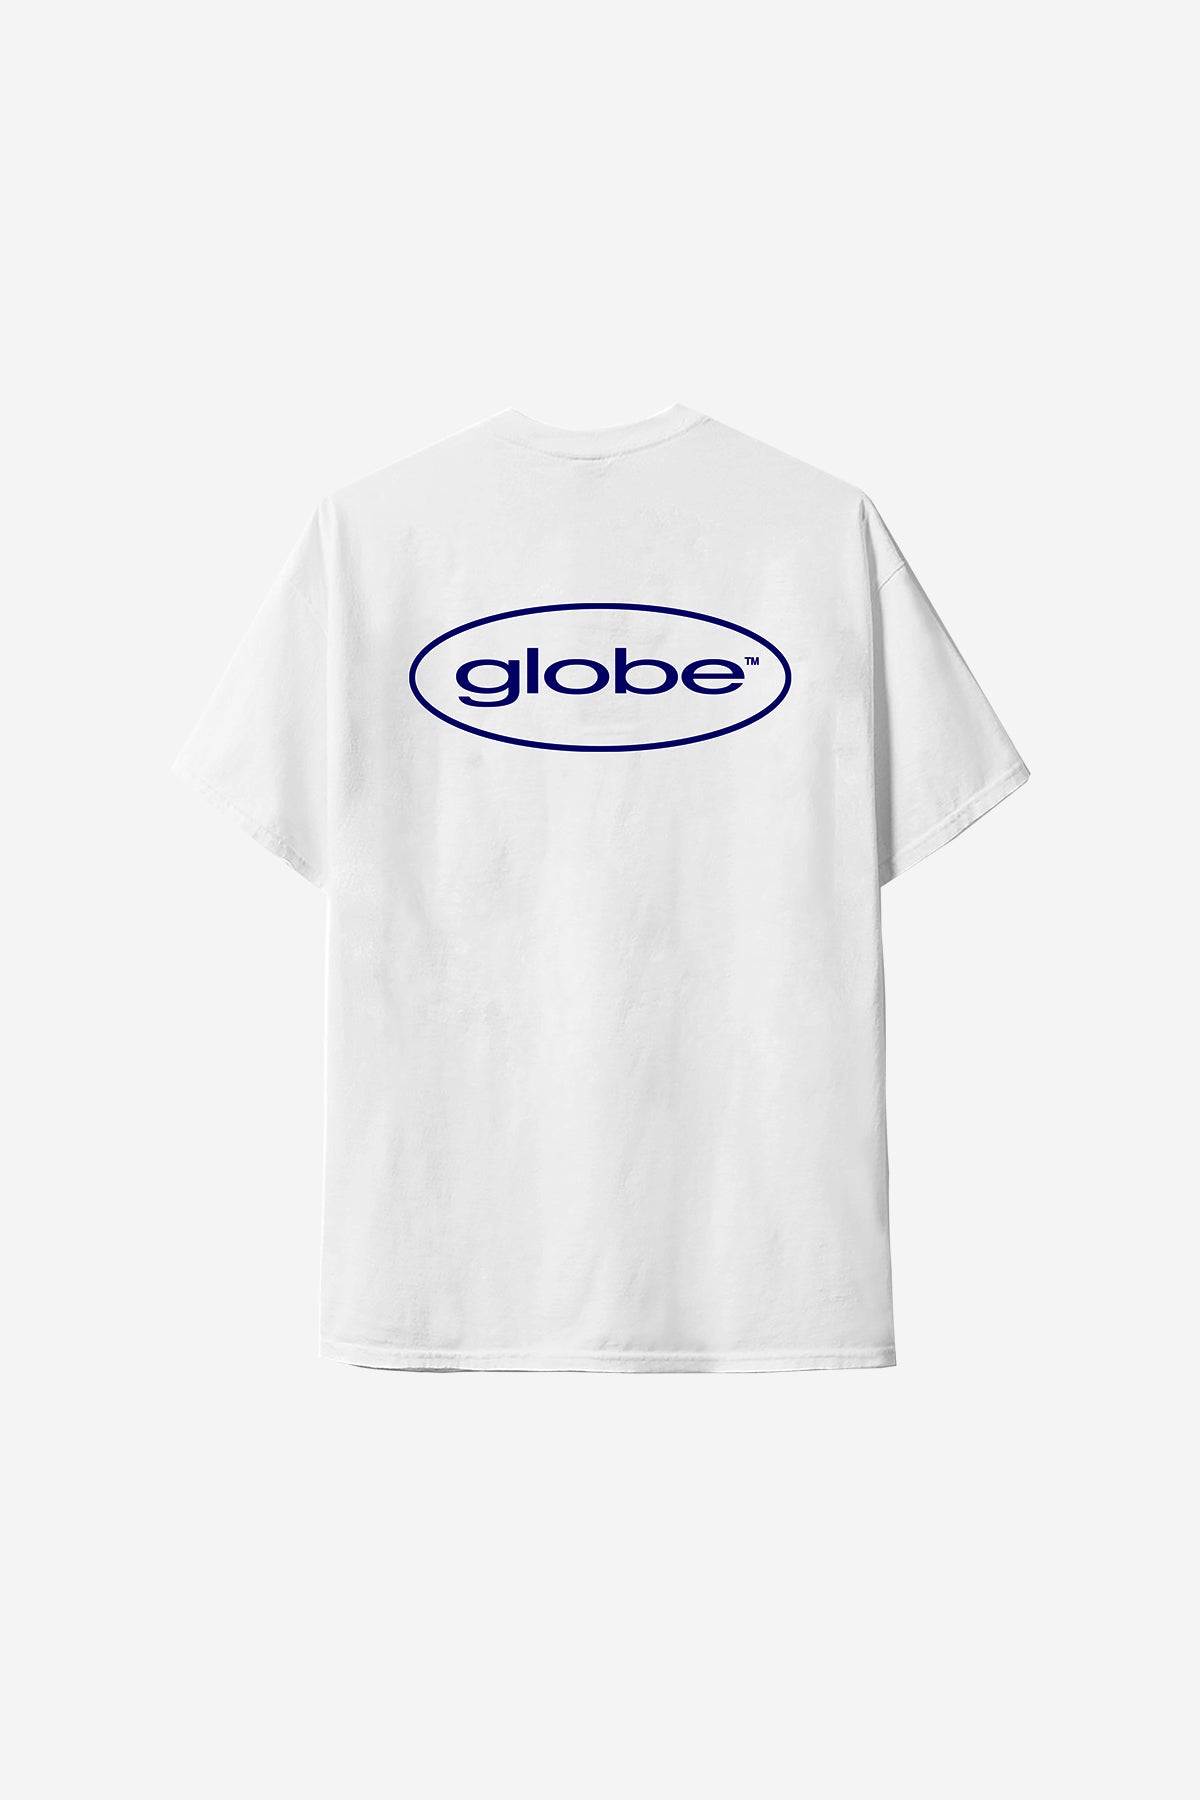 Globe - T-shirt oval - White